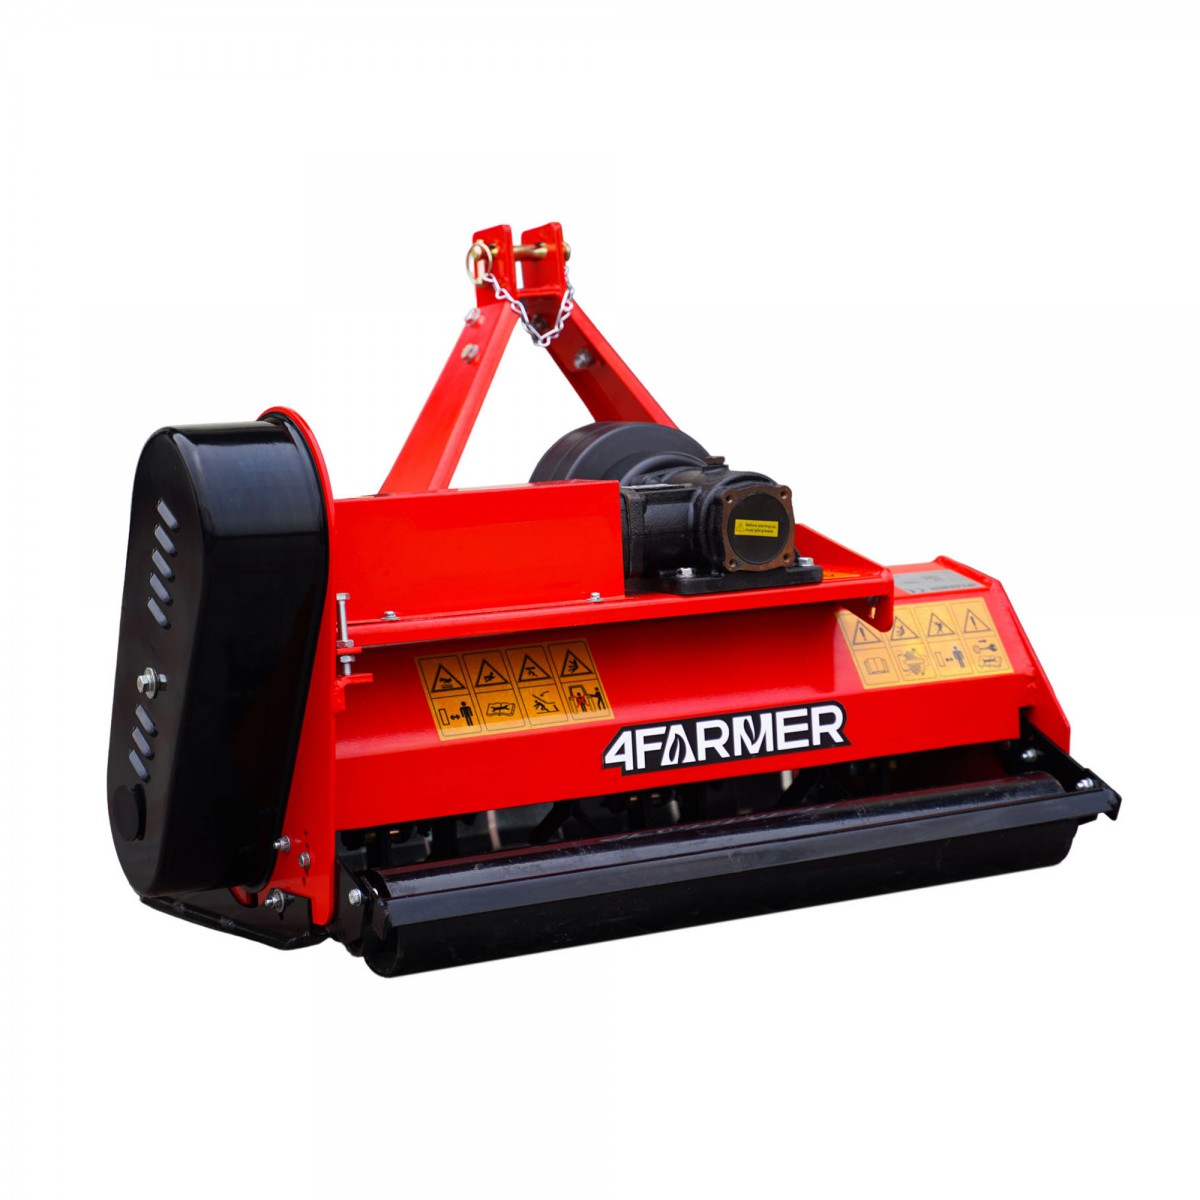 Trituradora de martillos EF 85 4FARMER - rojo